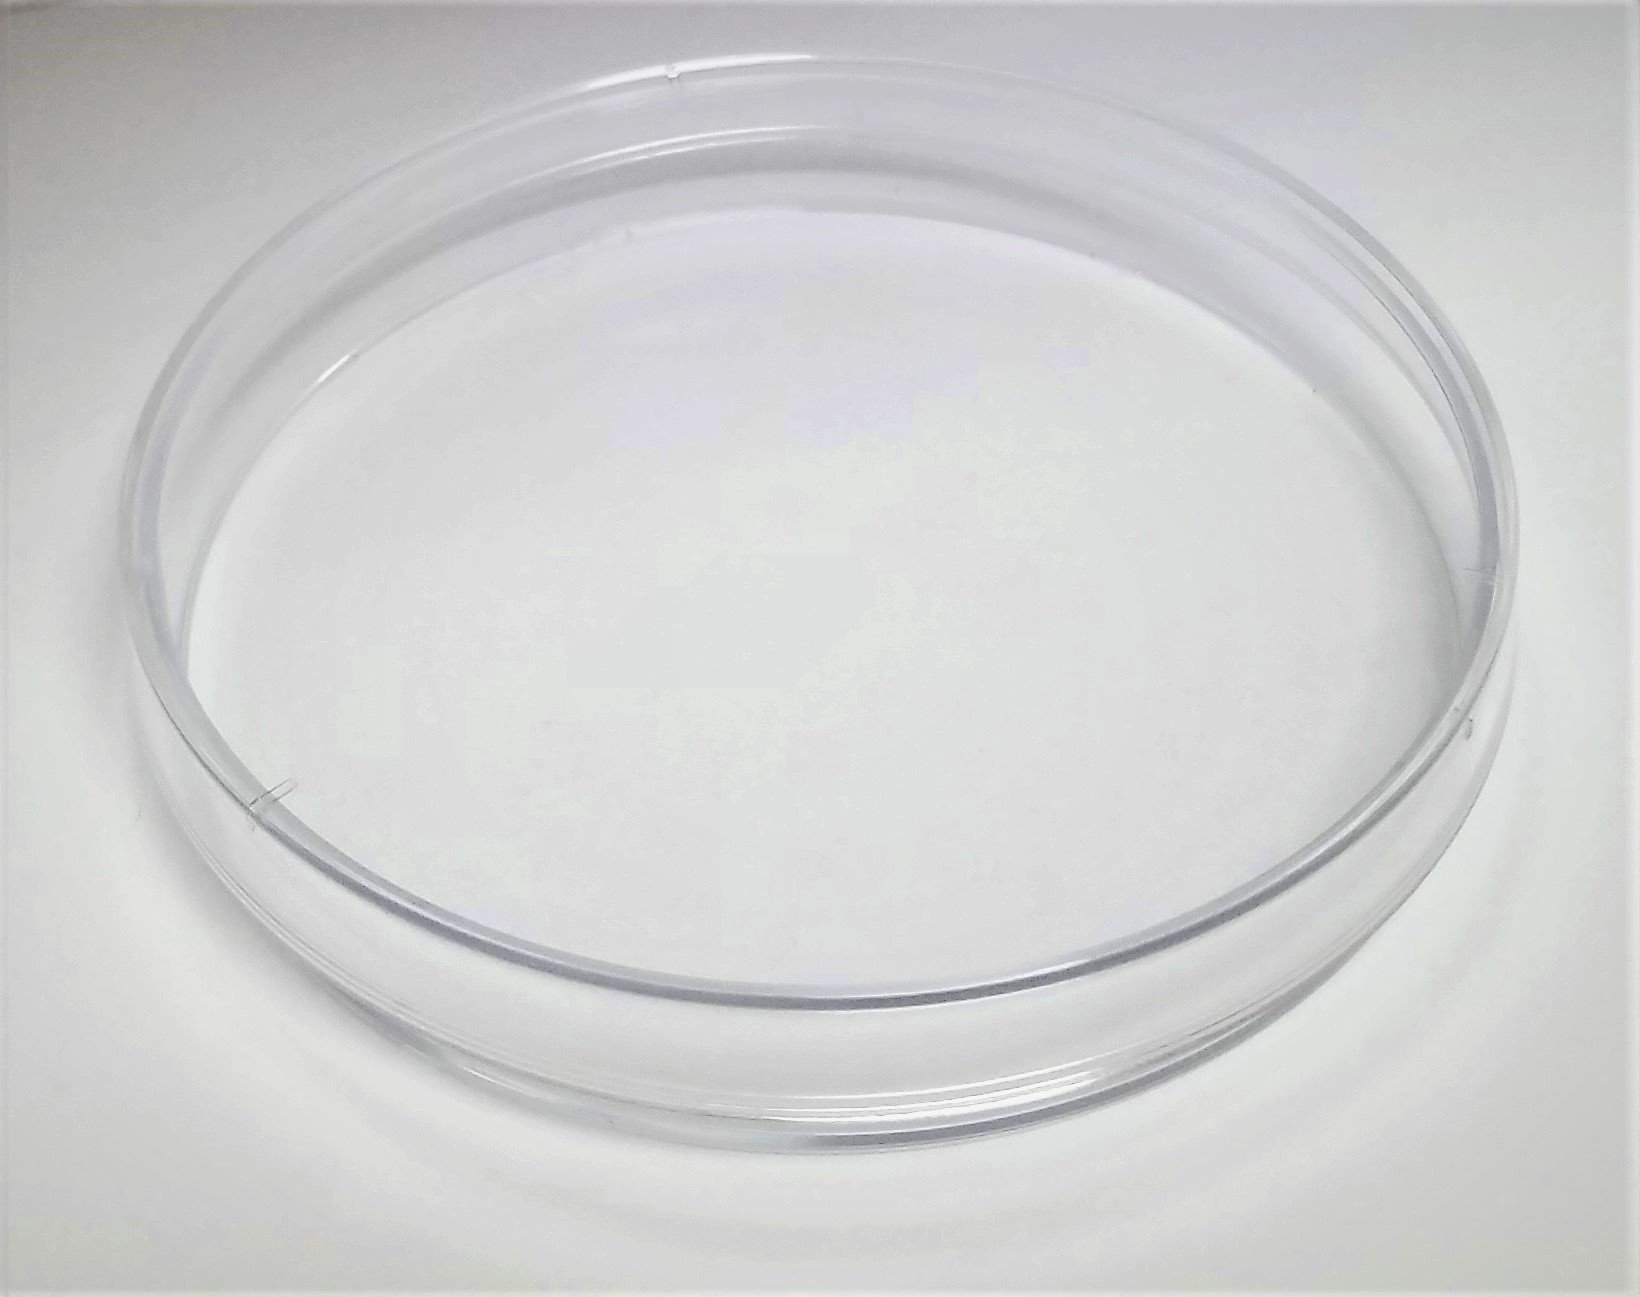 SPL Petri Dish, 100x15mm, Crystal grade Polystyrene, Sterile, 3 ...